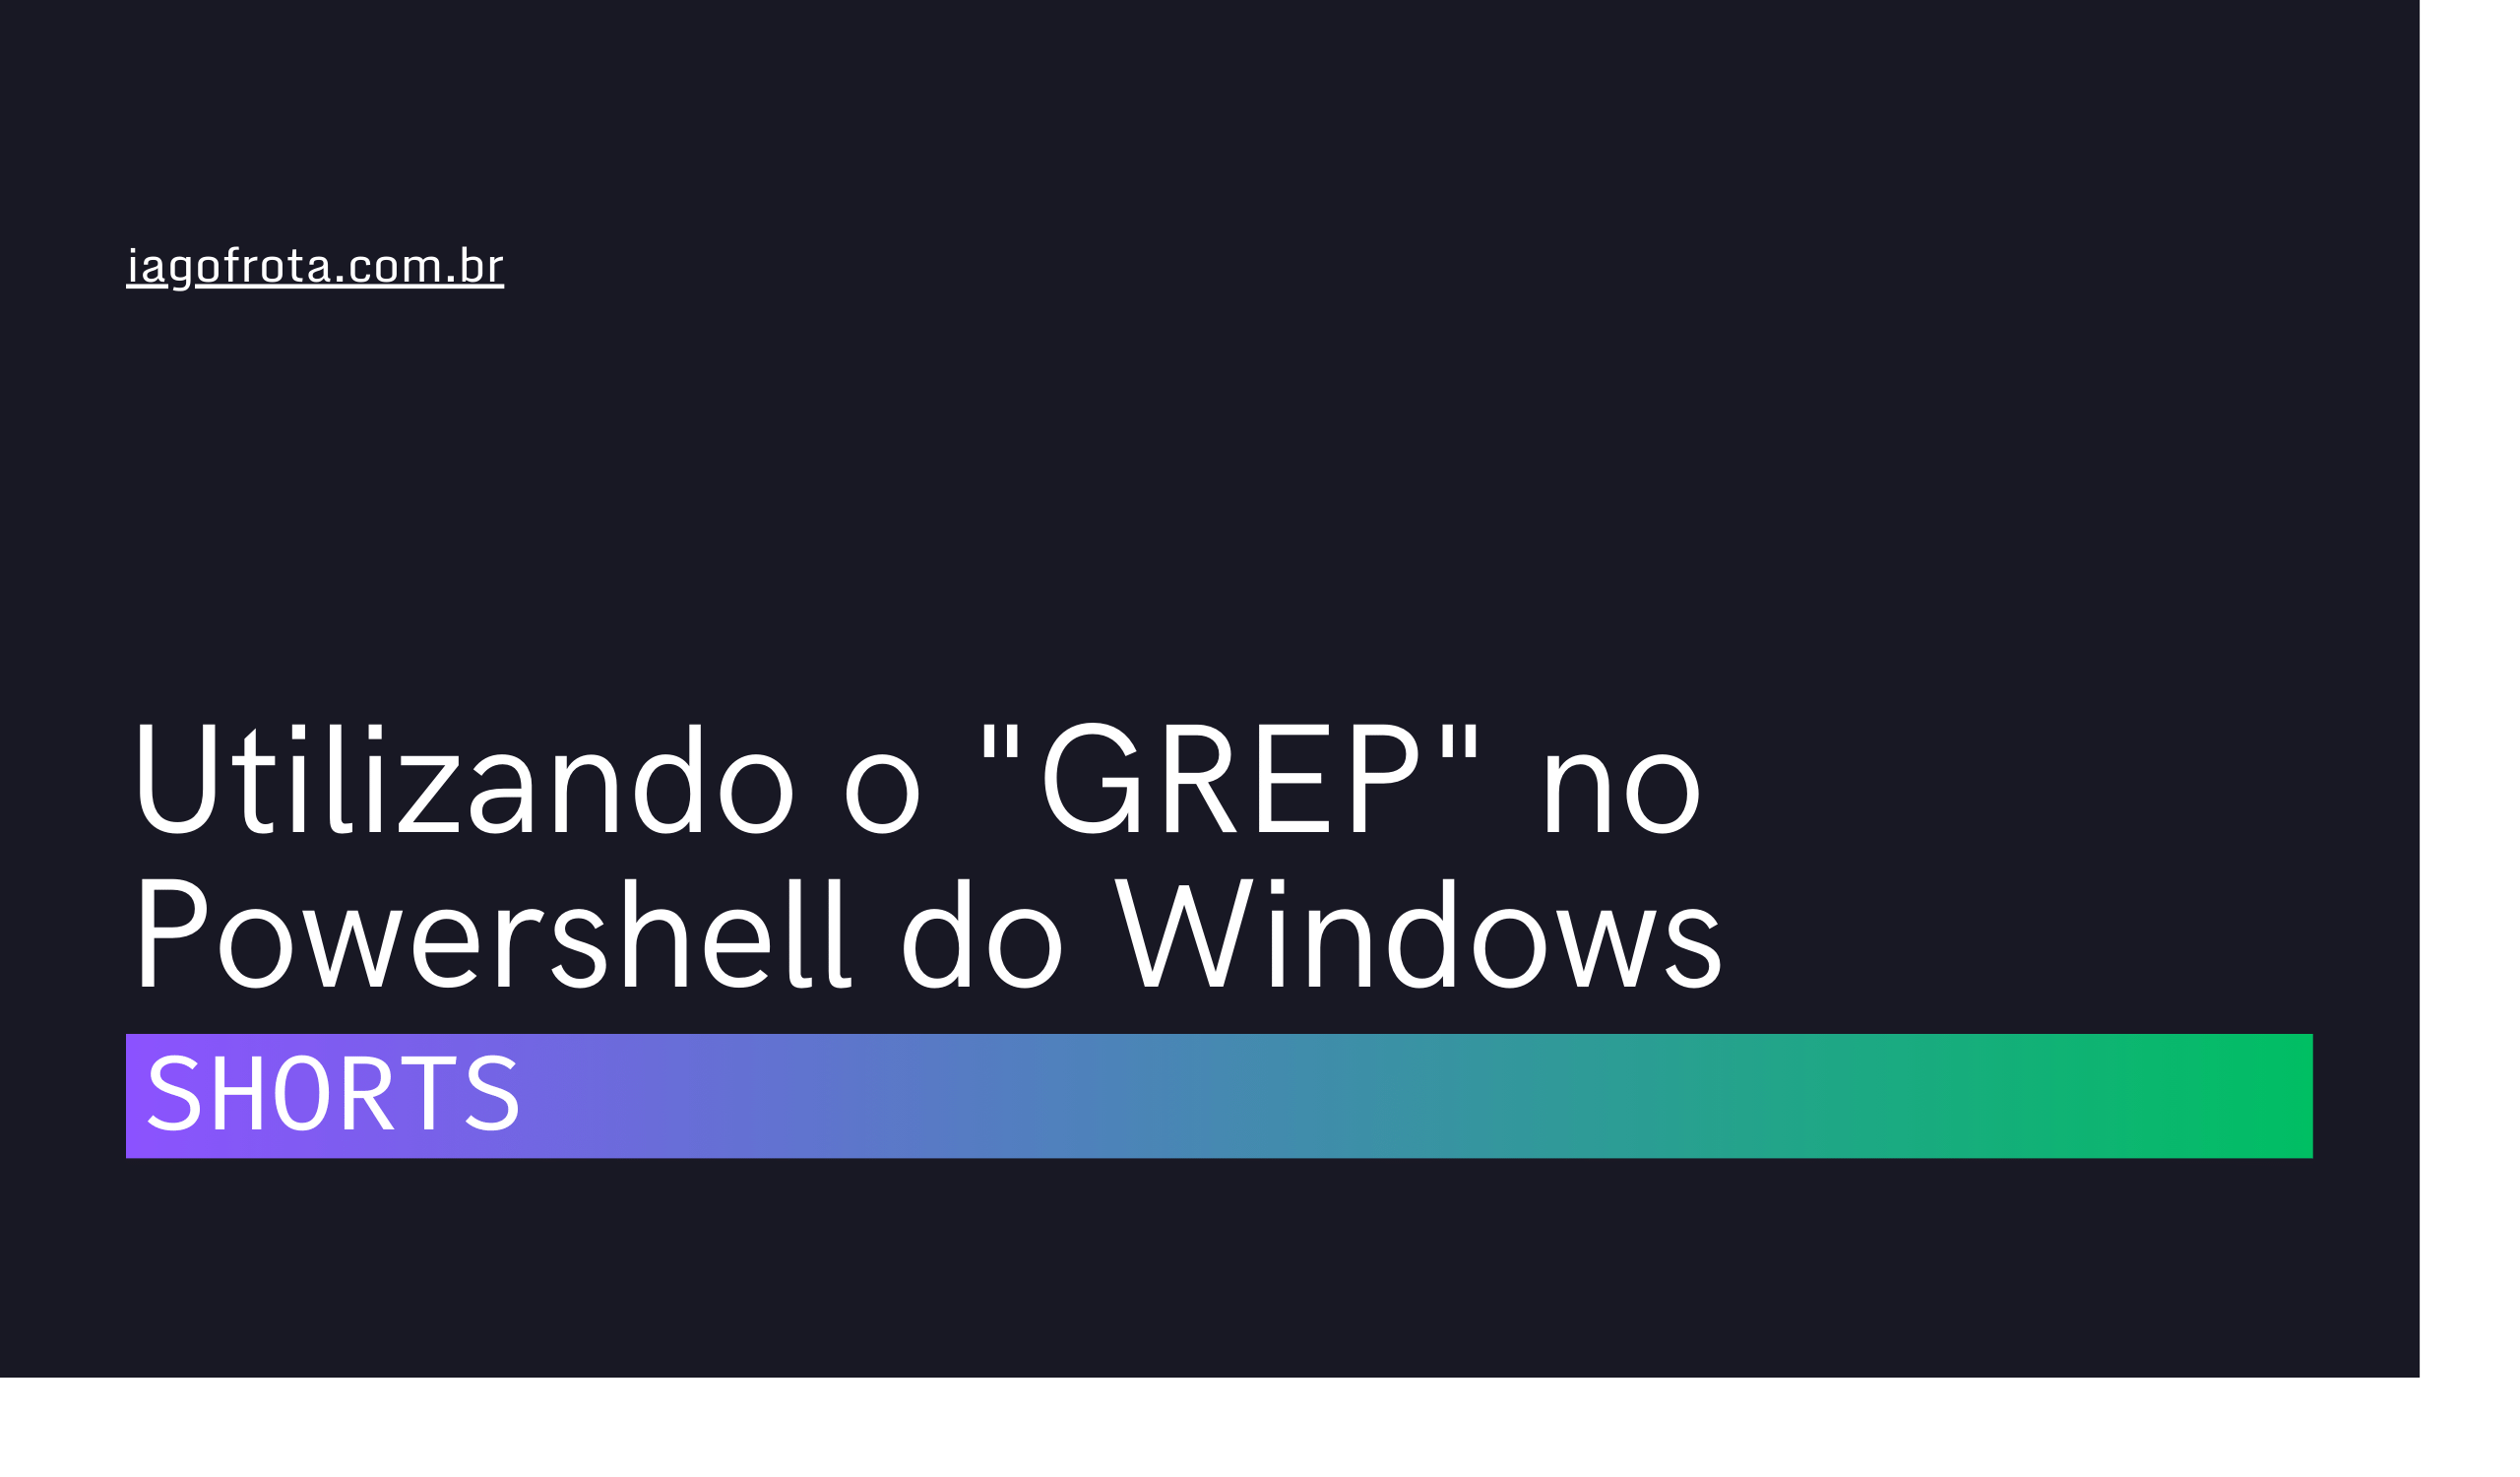 [shorts] Utilizando o “GREP” no Powershell do Windows